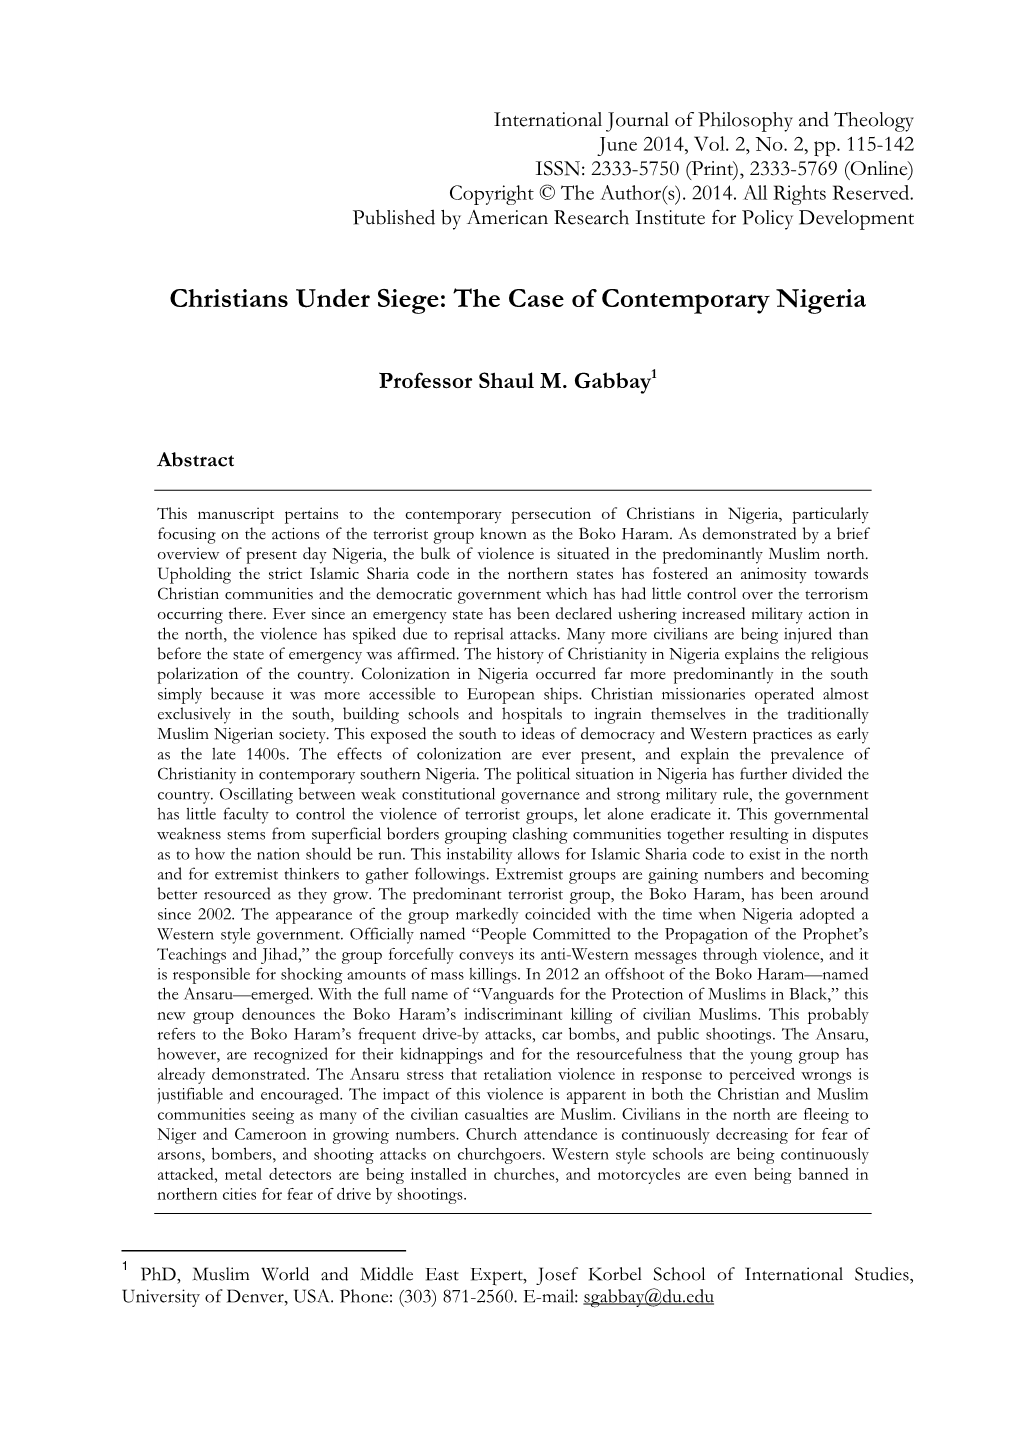 Christians Under Siege: the Case of Contemporary Nigeria